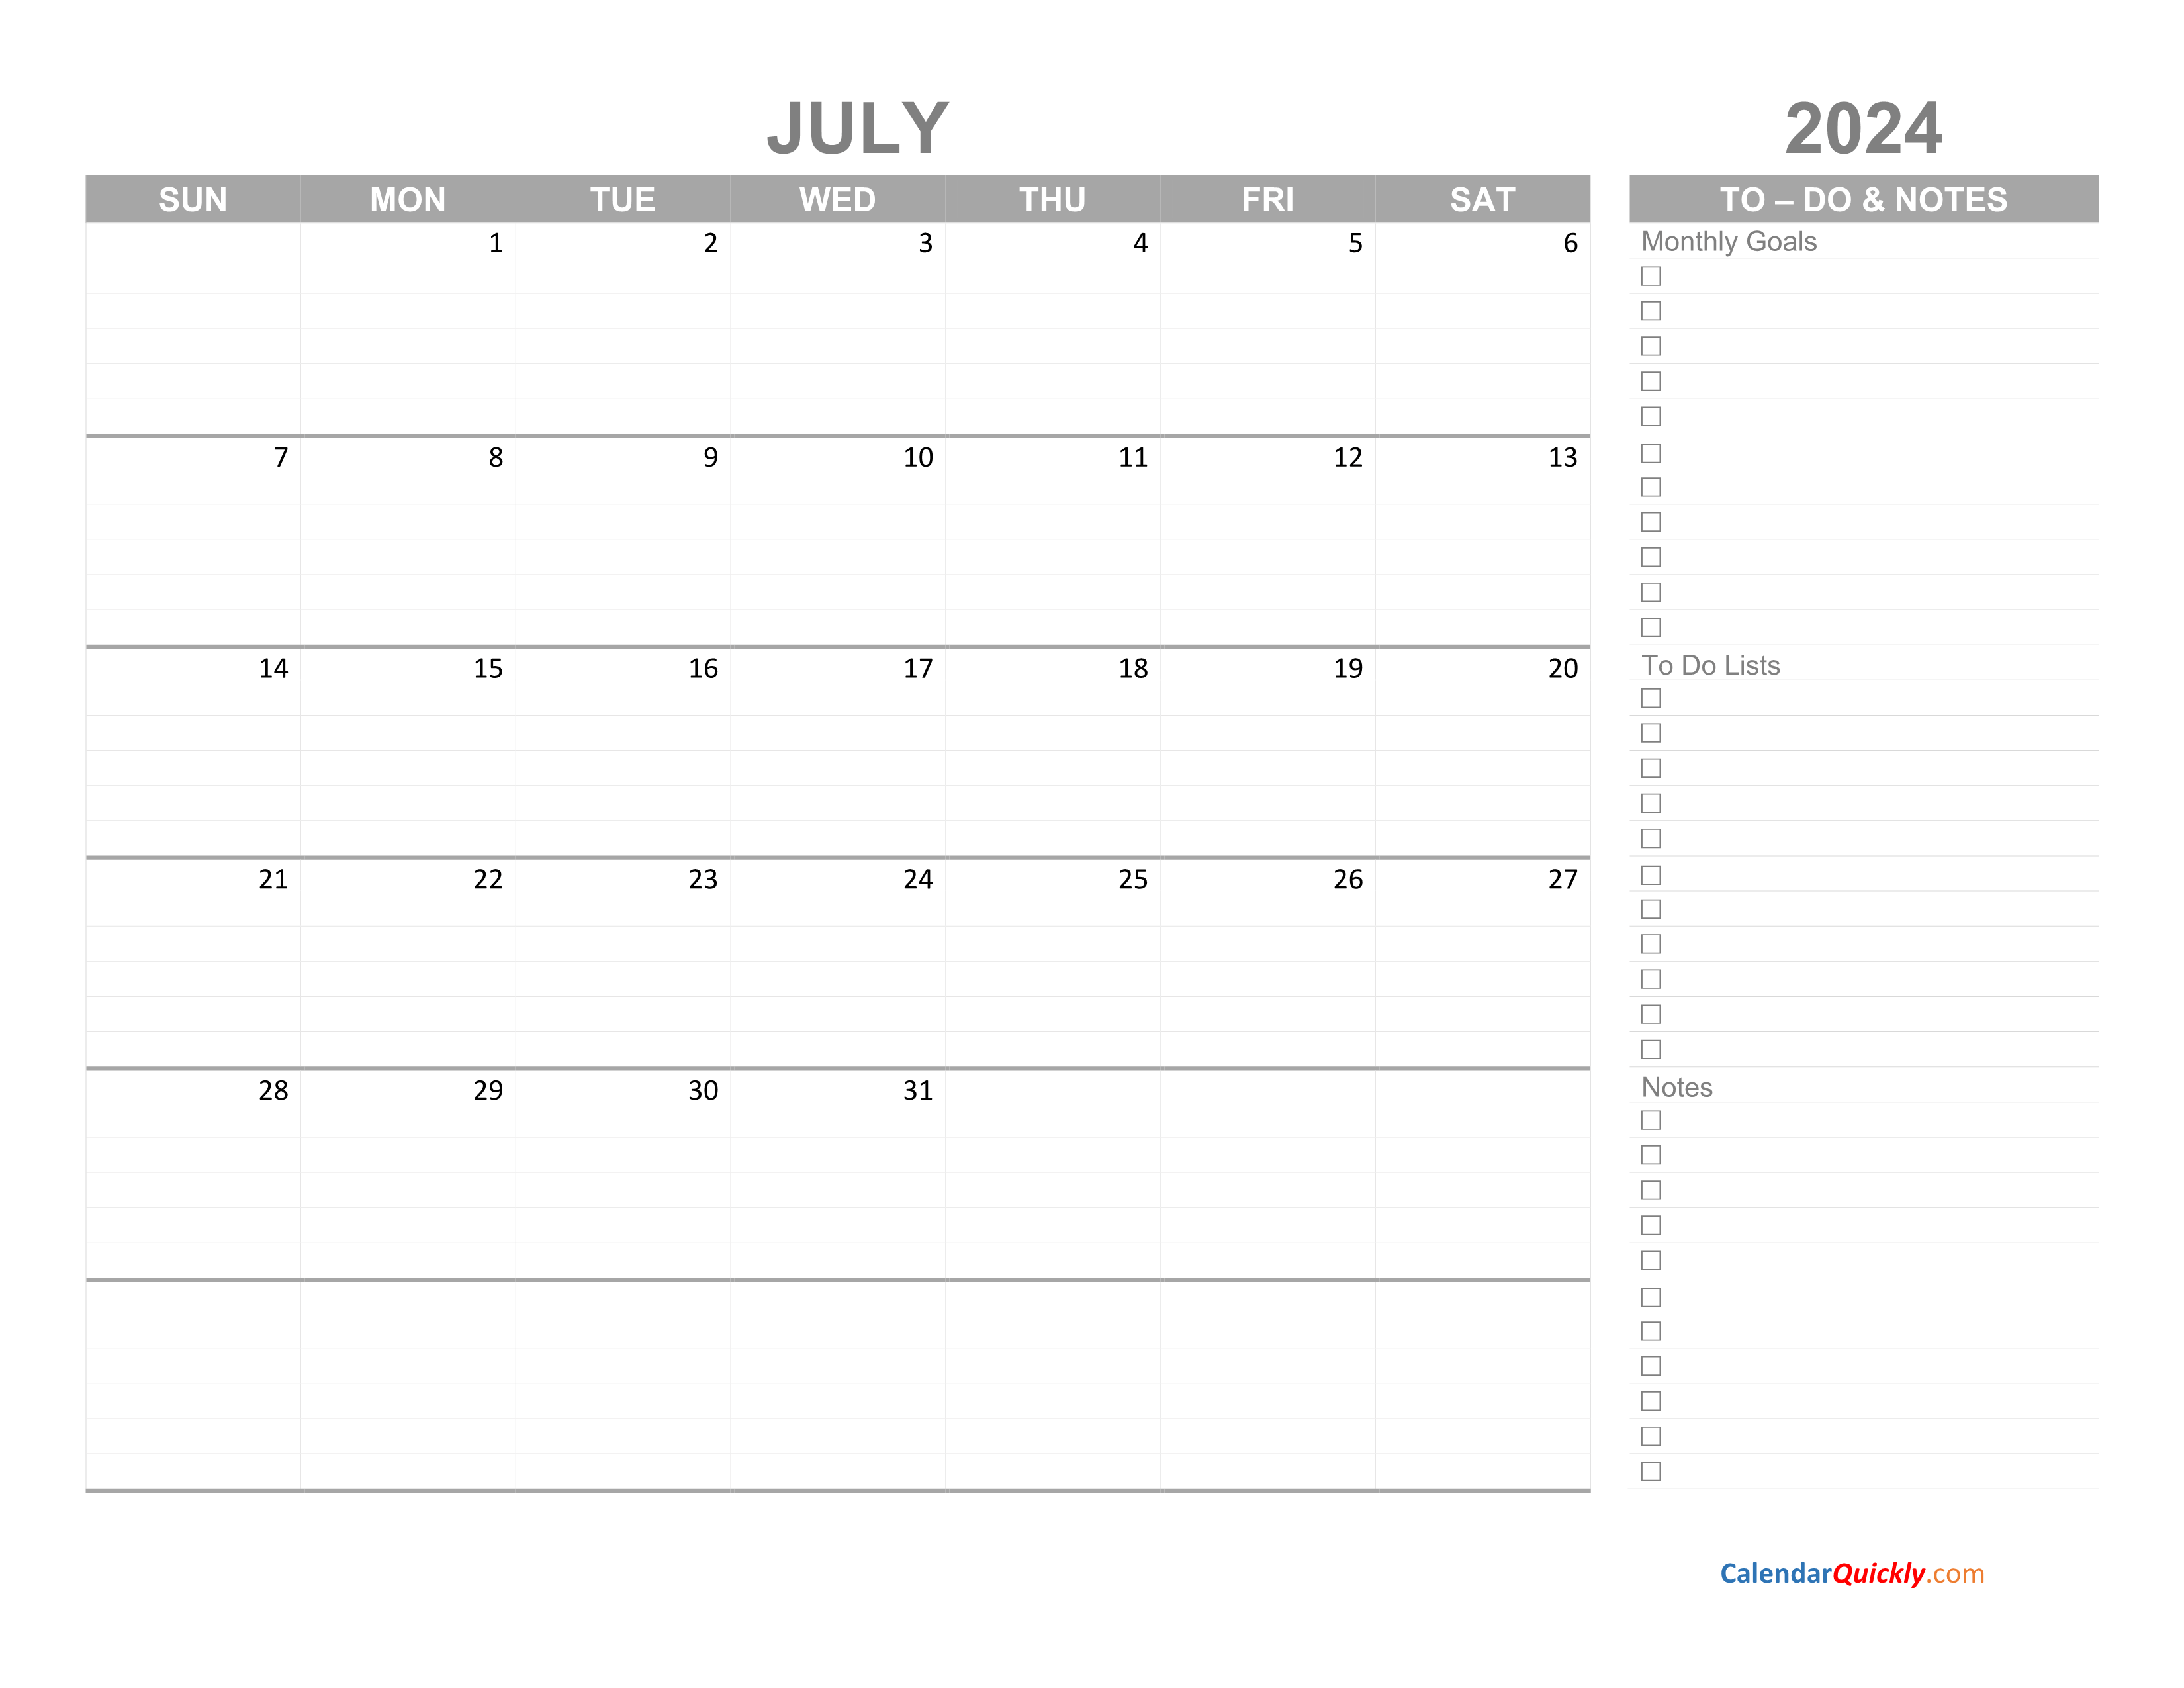 july-2024-calendar-with-to-do-list-calendar-quickly